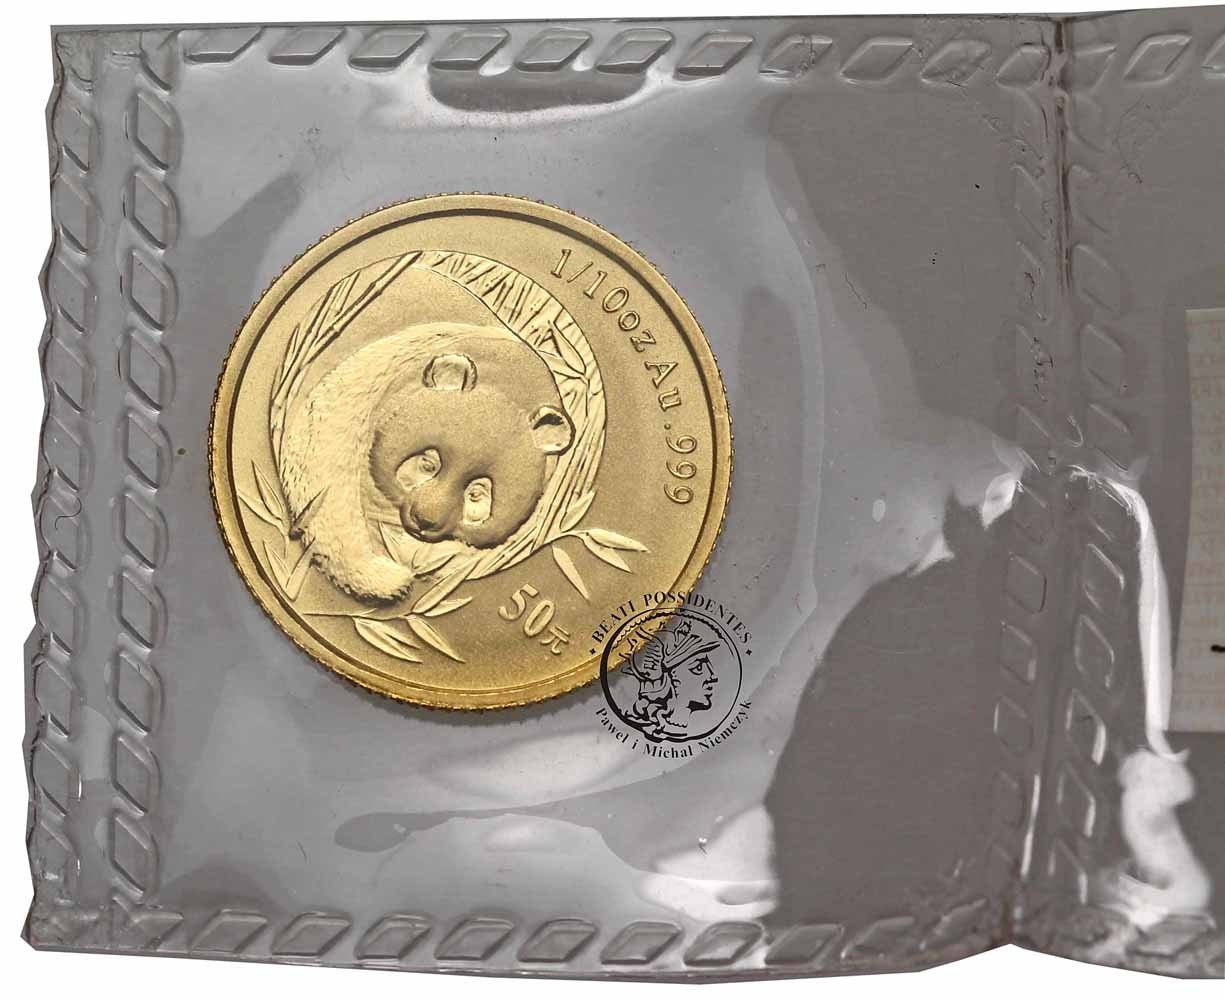 Chiny 50 Yuan 2003 Panda (1/10 uncji złota) st.L